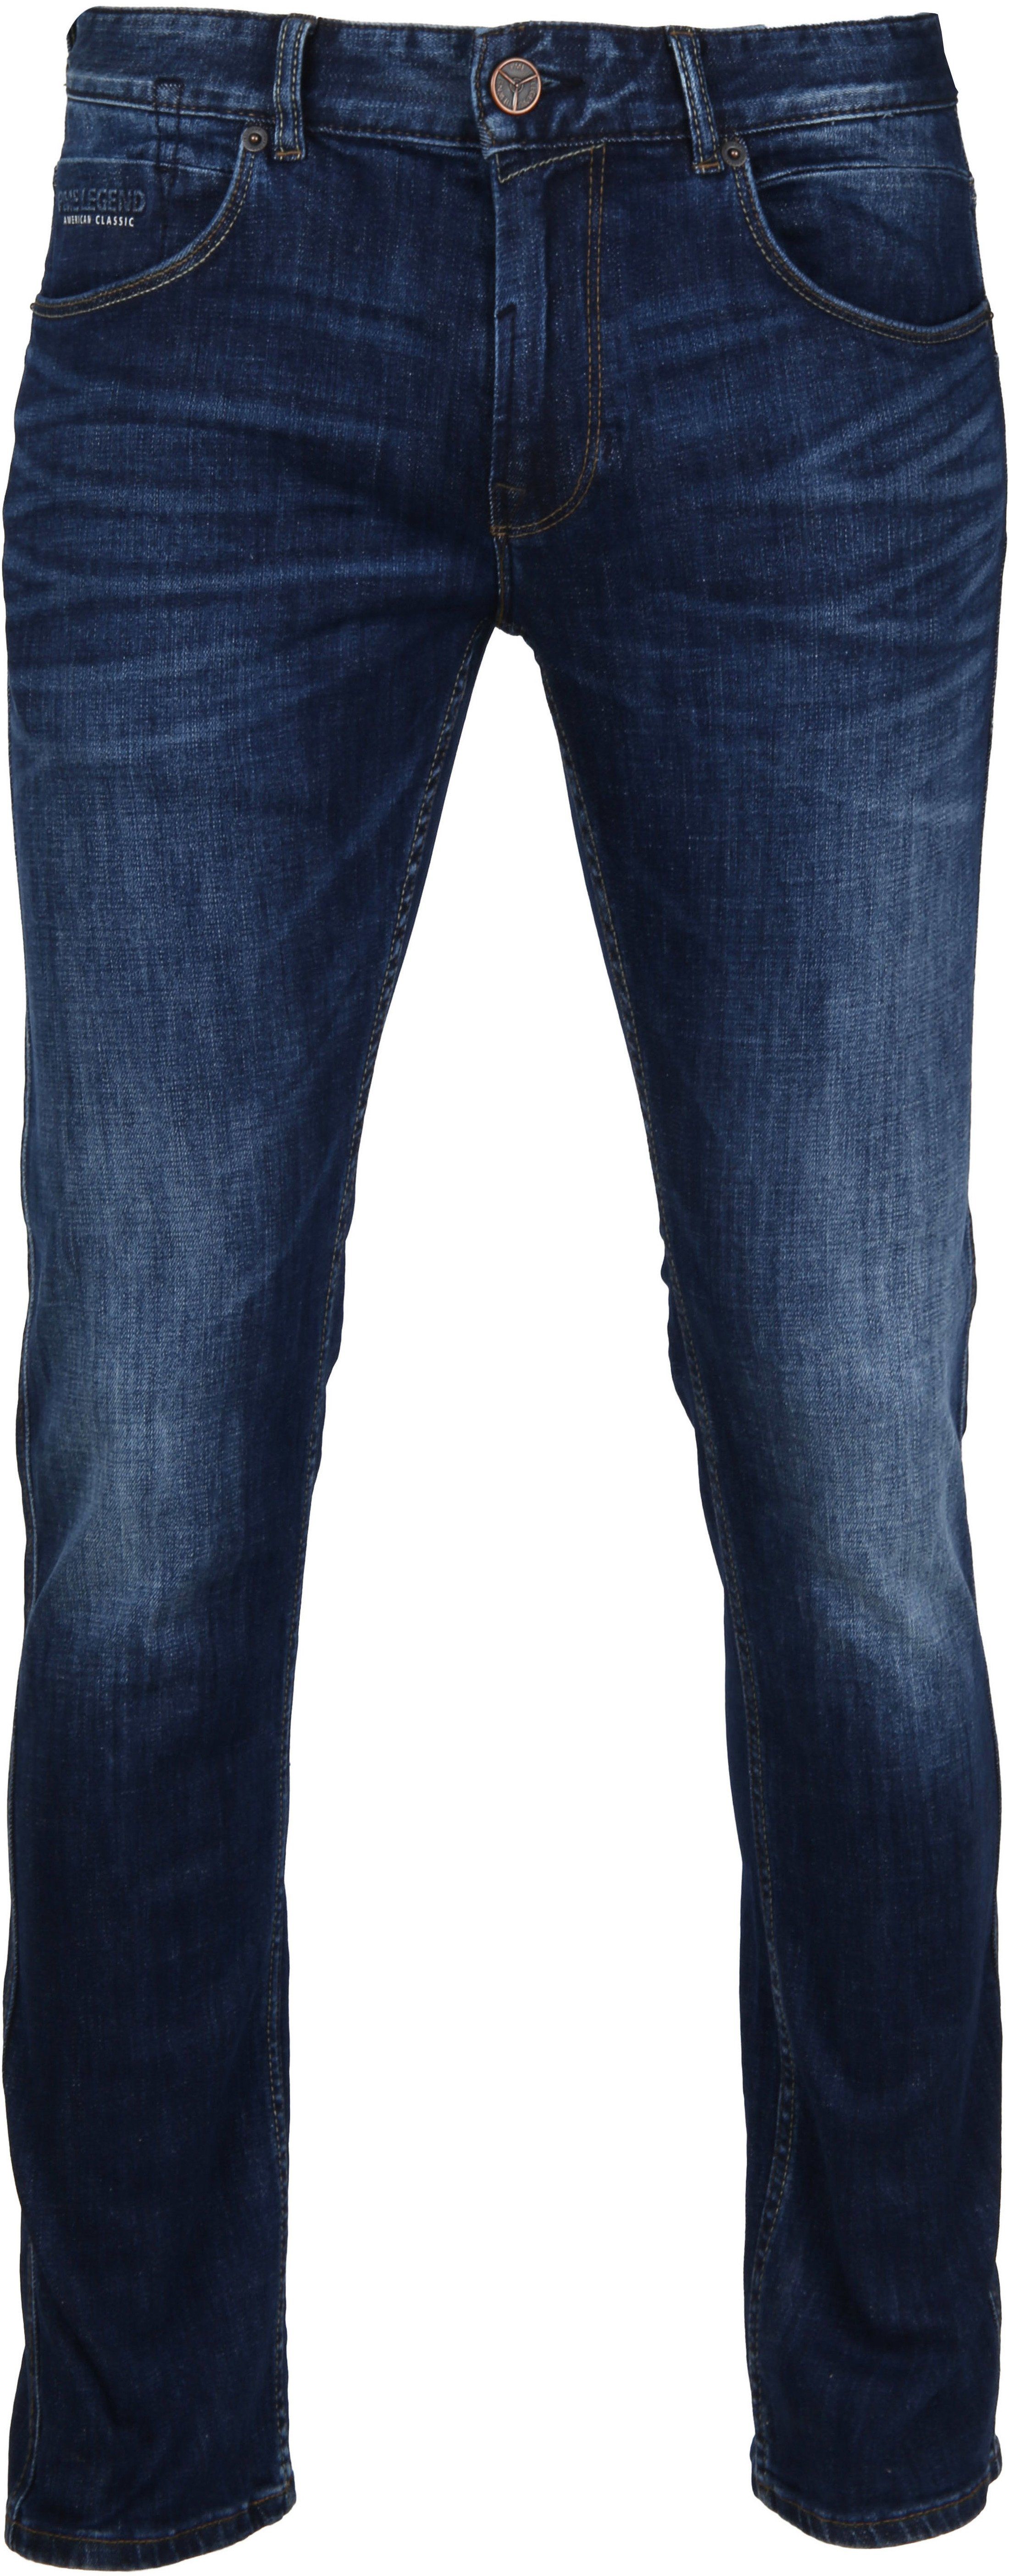 PME Legend Nightflight Jeans Navy Dark Blue Blue size W 29